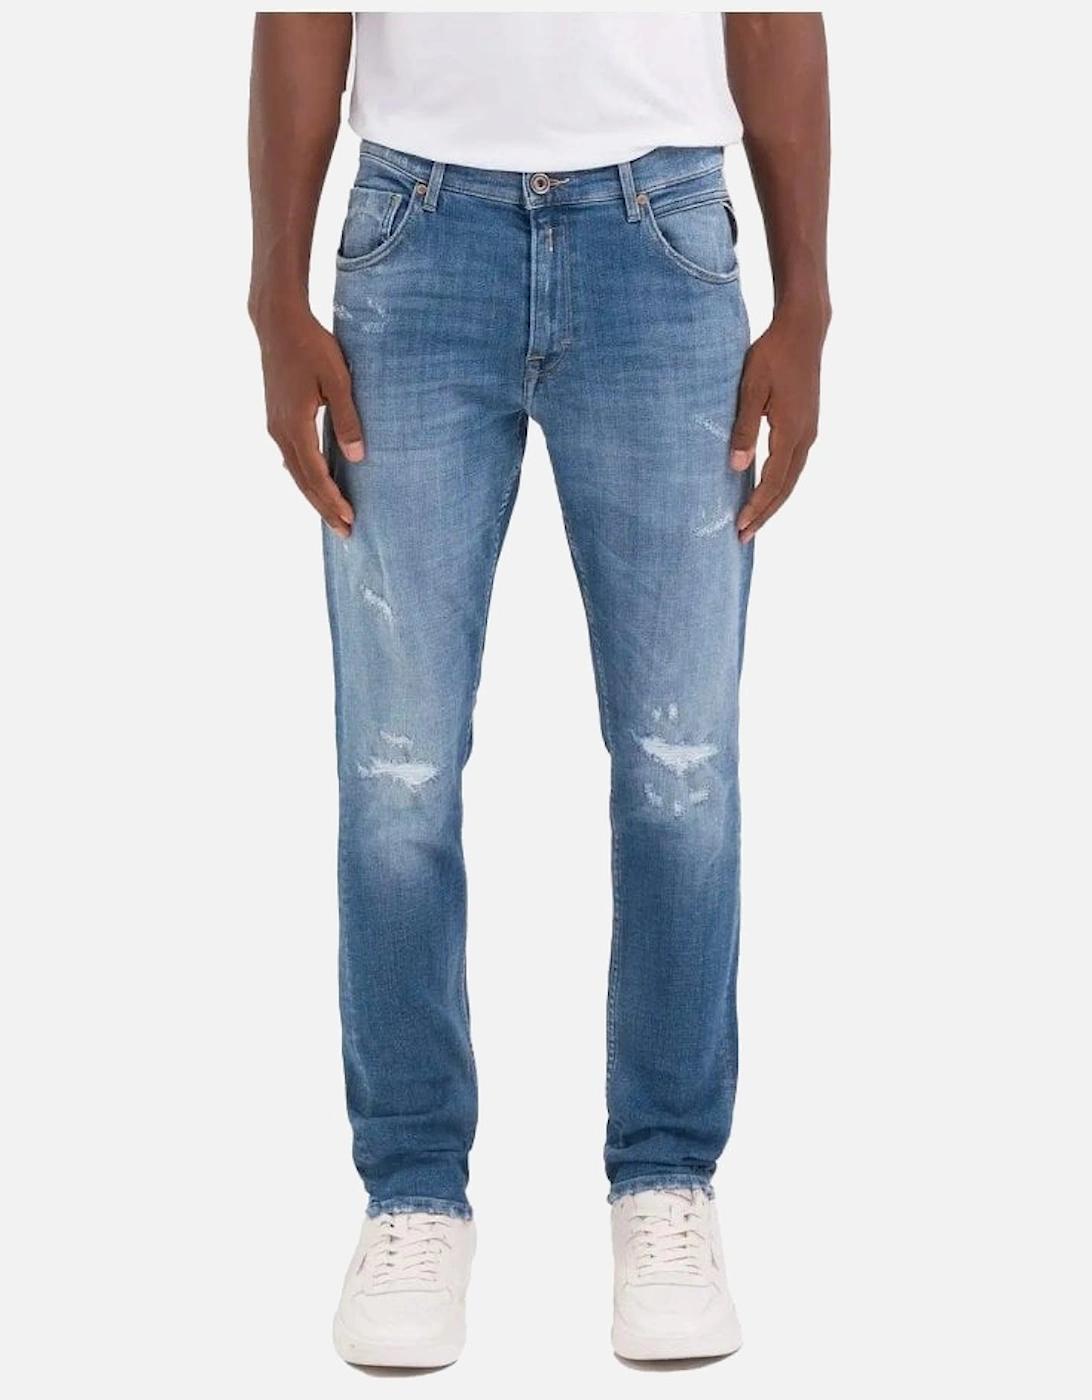 Mickym Premium Aged 10yrs Slim Jeans 009, 5 of 4